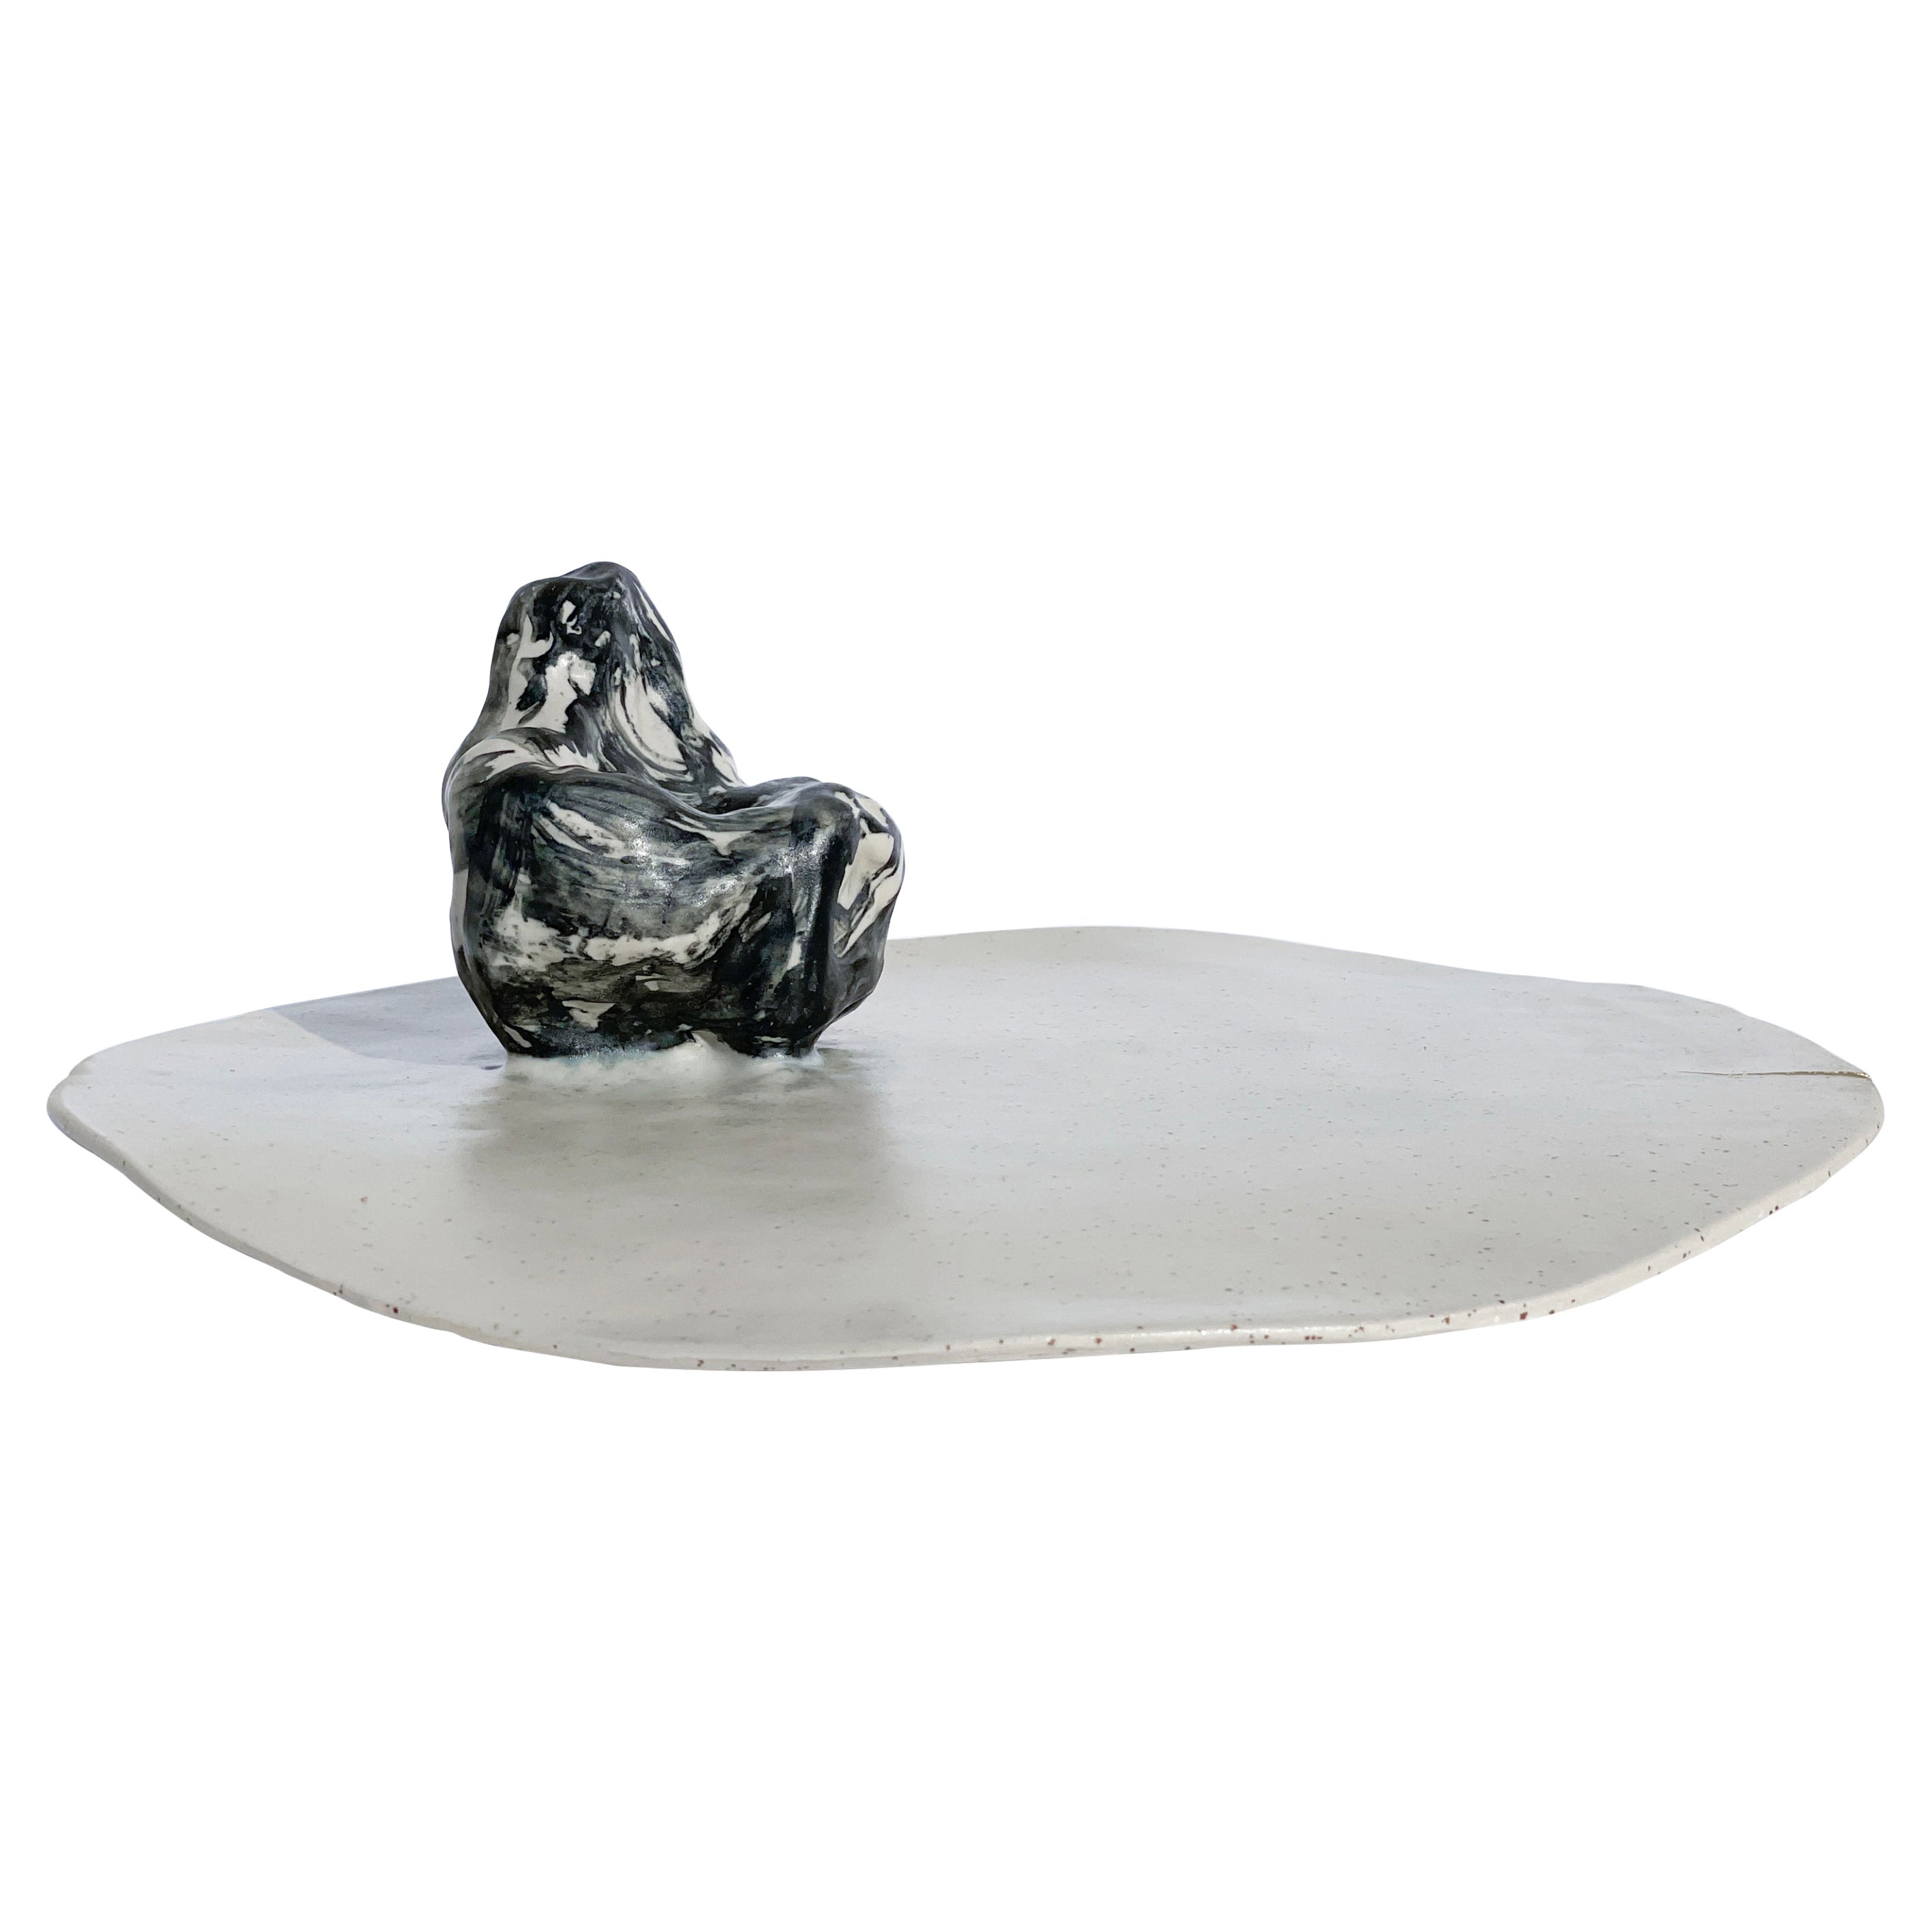 Unique Sculptural 'Gongshi' Plates N0.21 Objet D'art Matt Finish For Sale